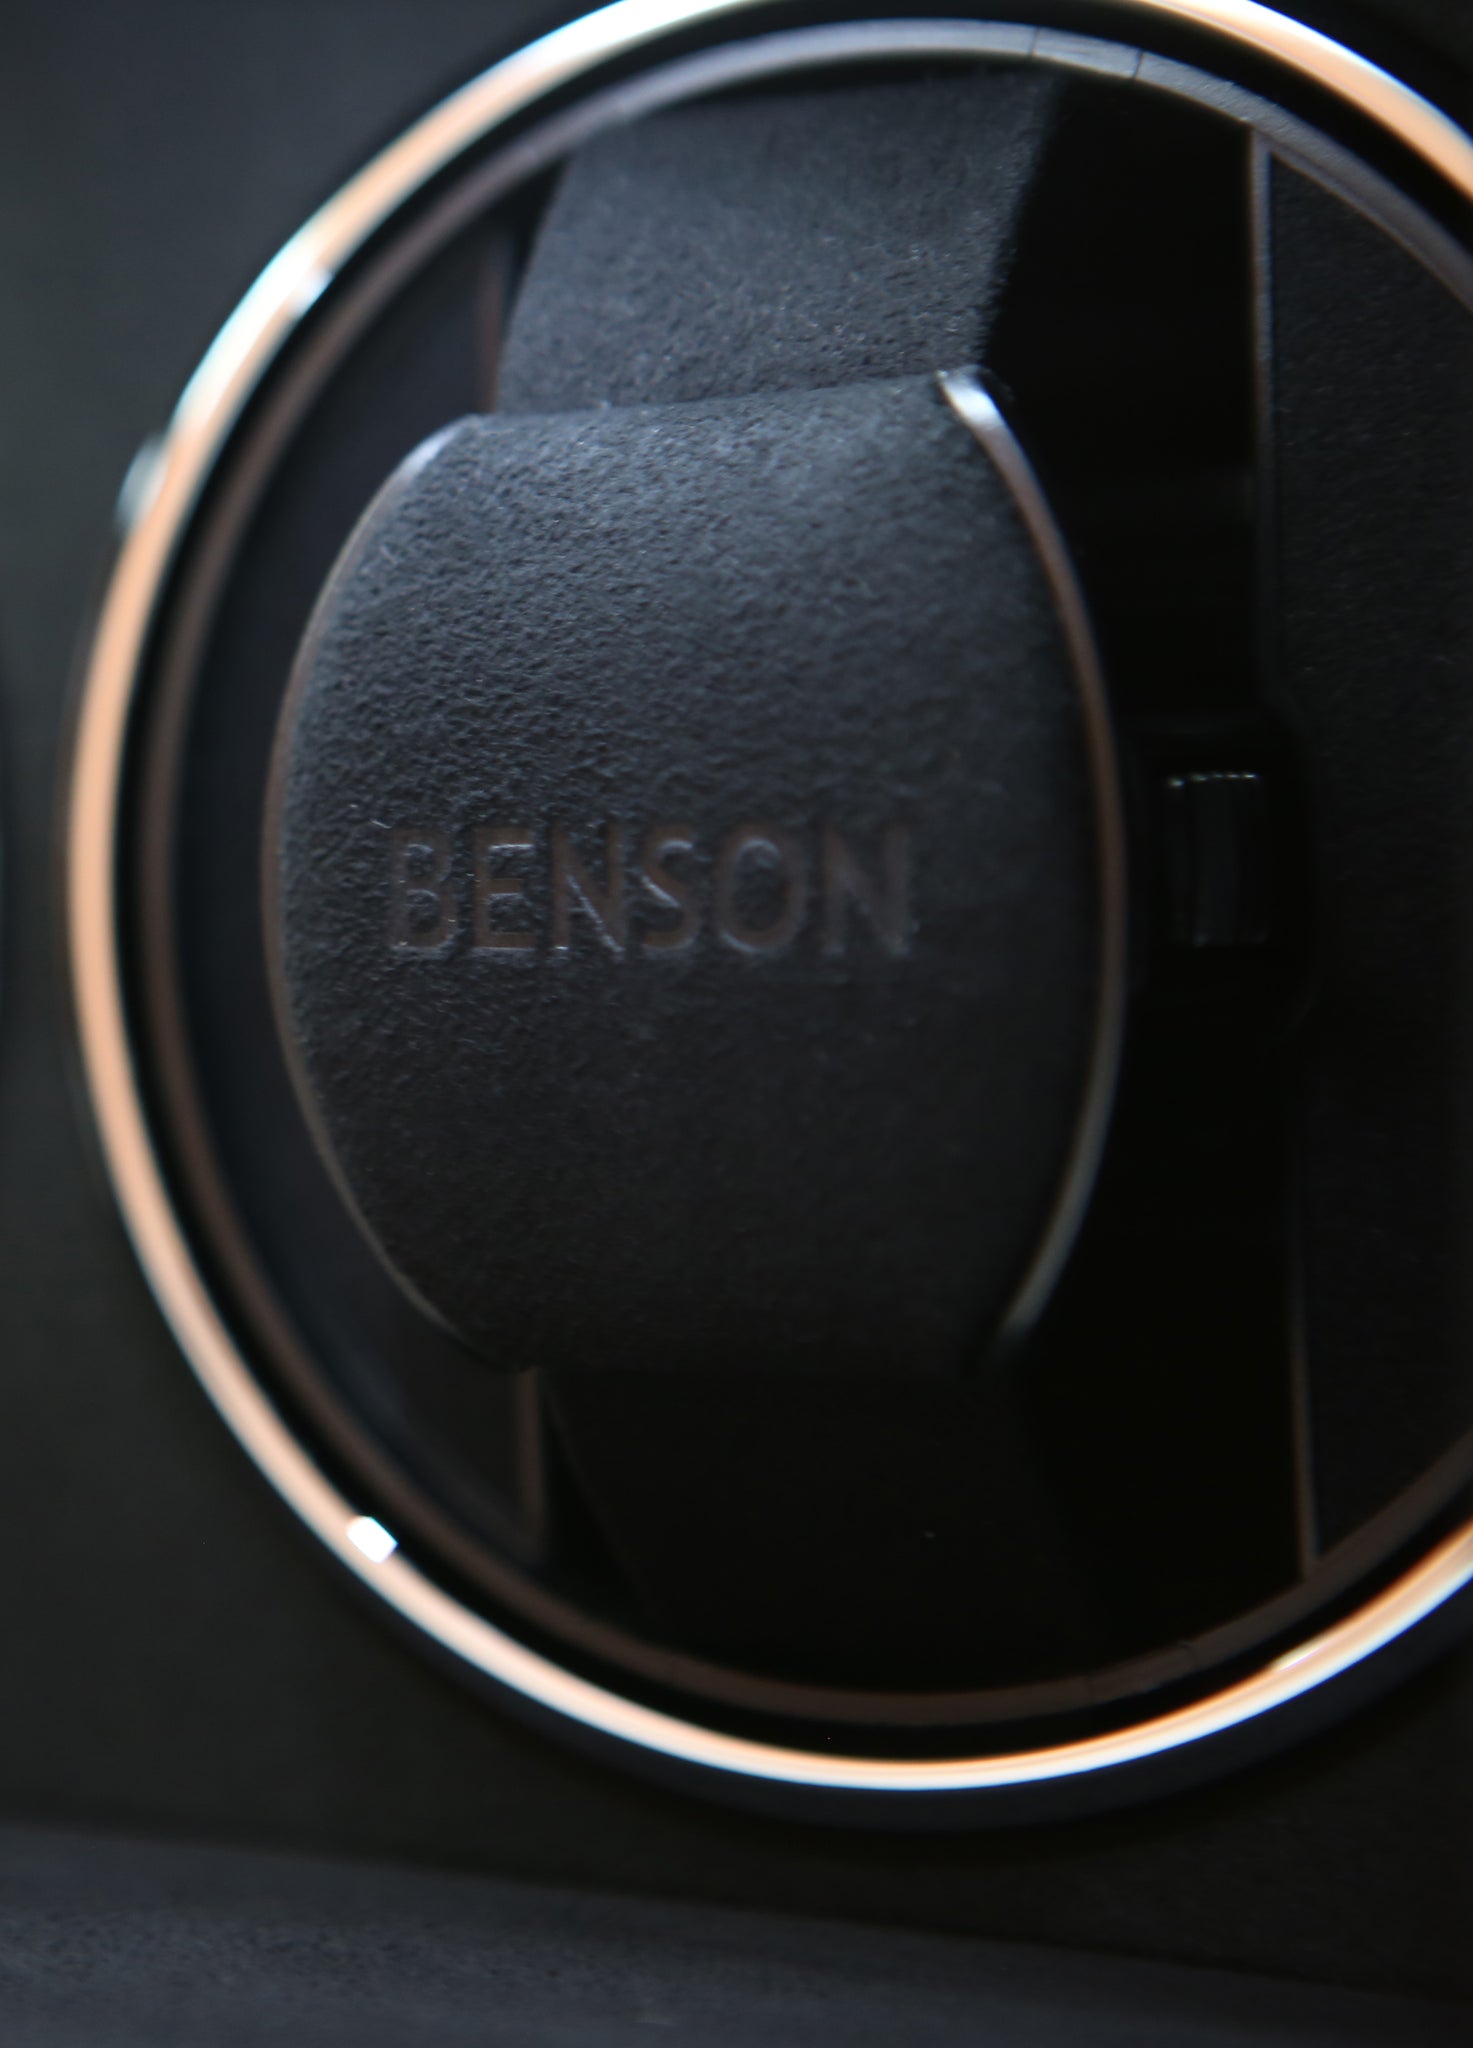 Benson Swiss Series Leather Watch winder